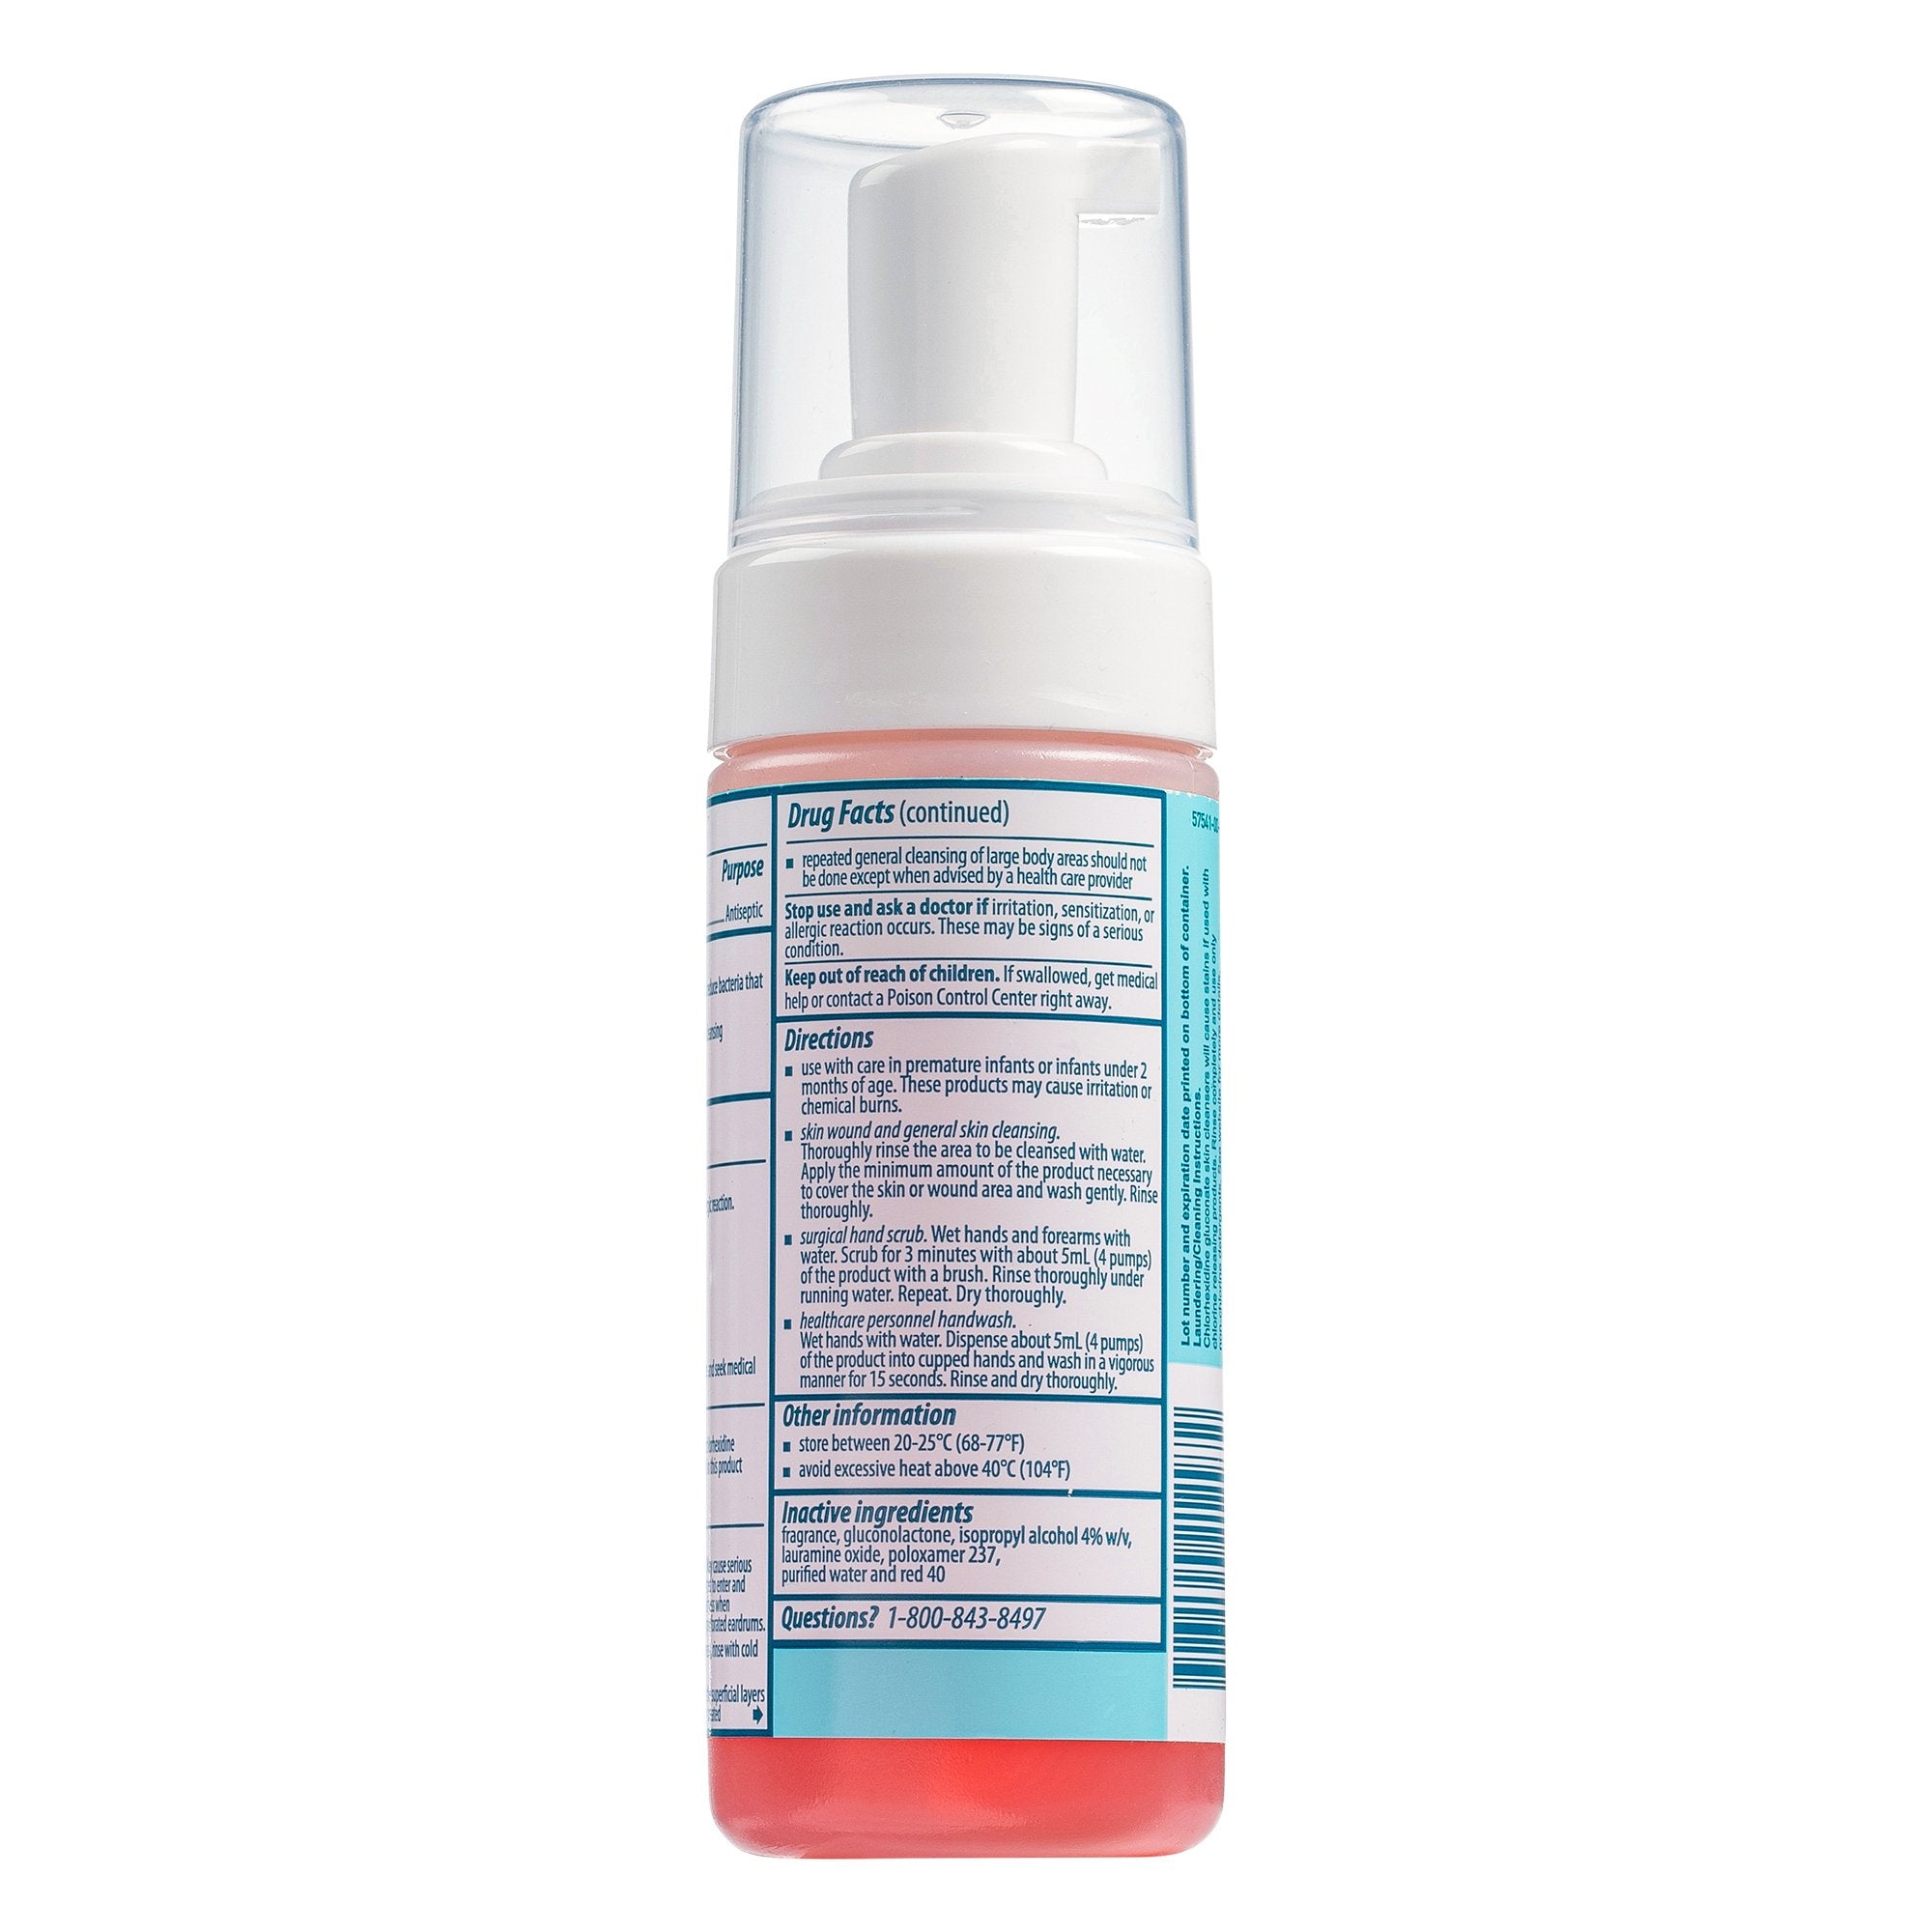 Antiseptic / Antimicrobial Skin Cleanser Hibiclens 4 oz. Pump Bottle 4% Strength CHG (Chlorhexidine Gluconate) NonSterile